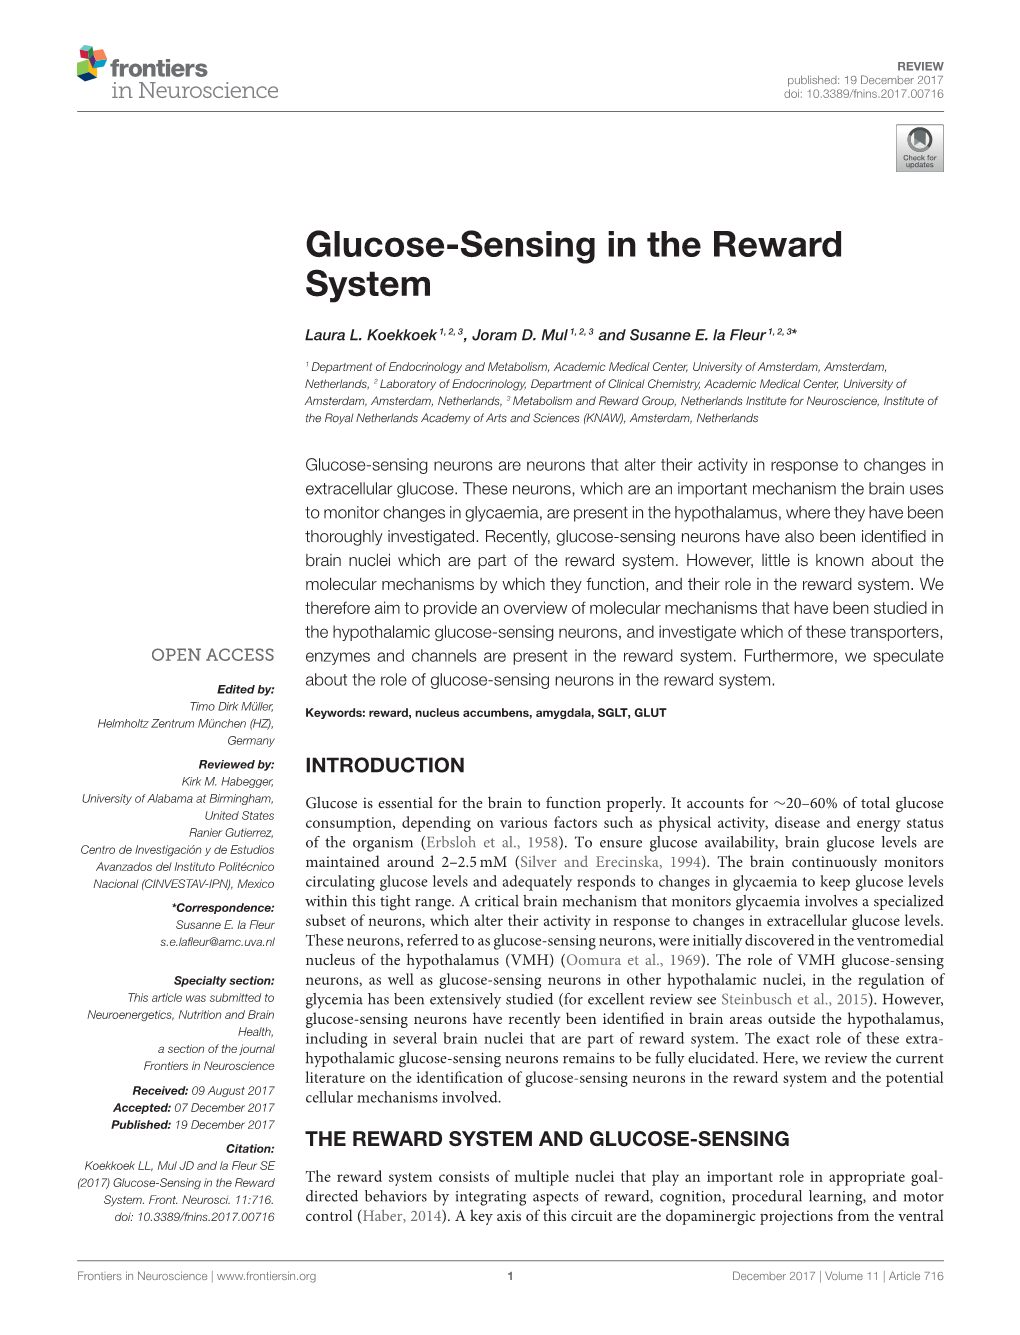 Glucose-Sensing in the Reward System